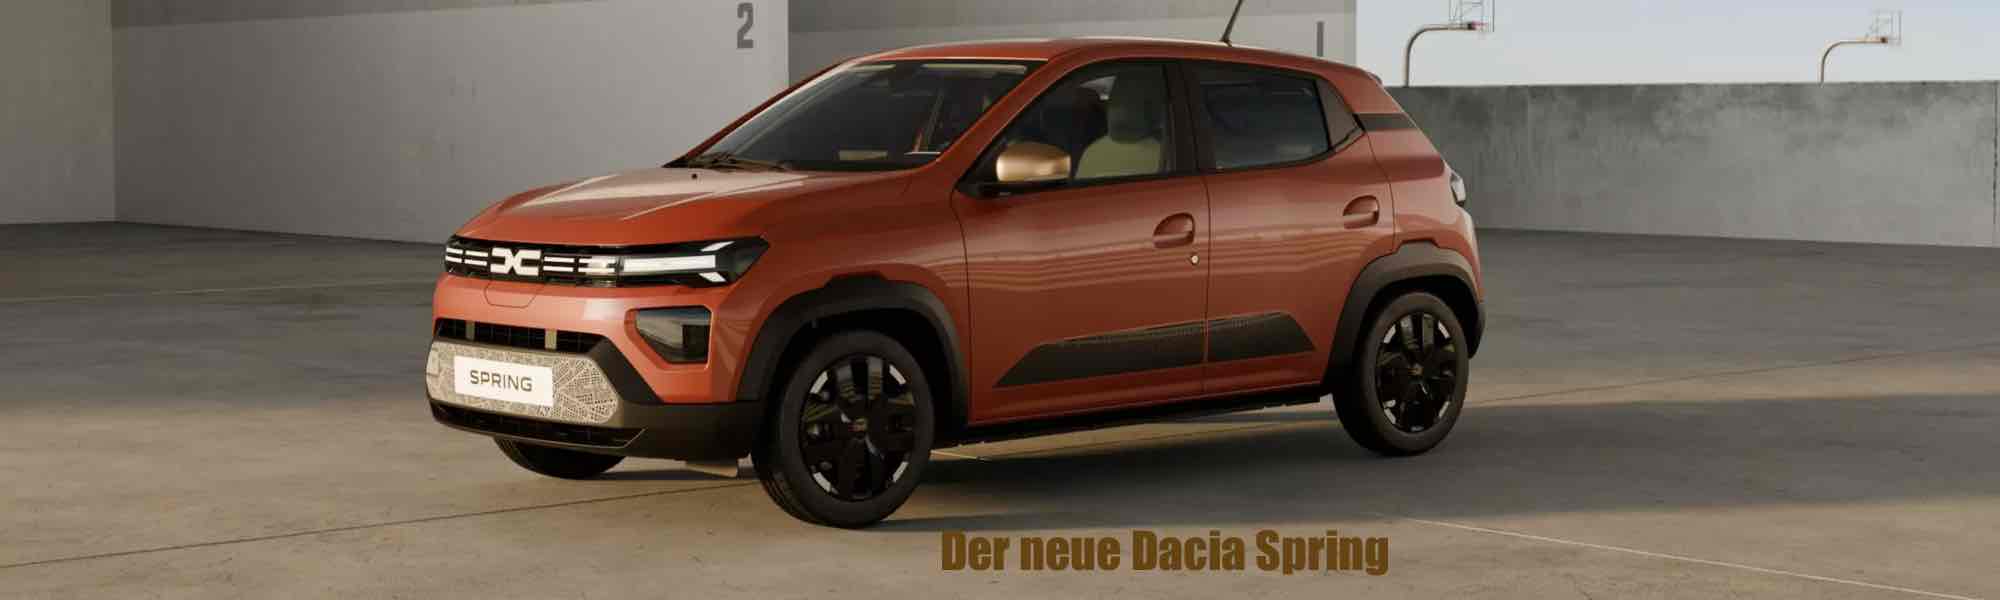 Der neue Dacia Spring